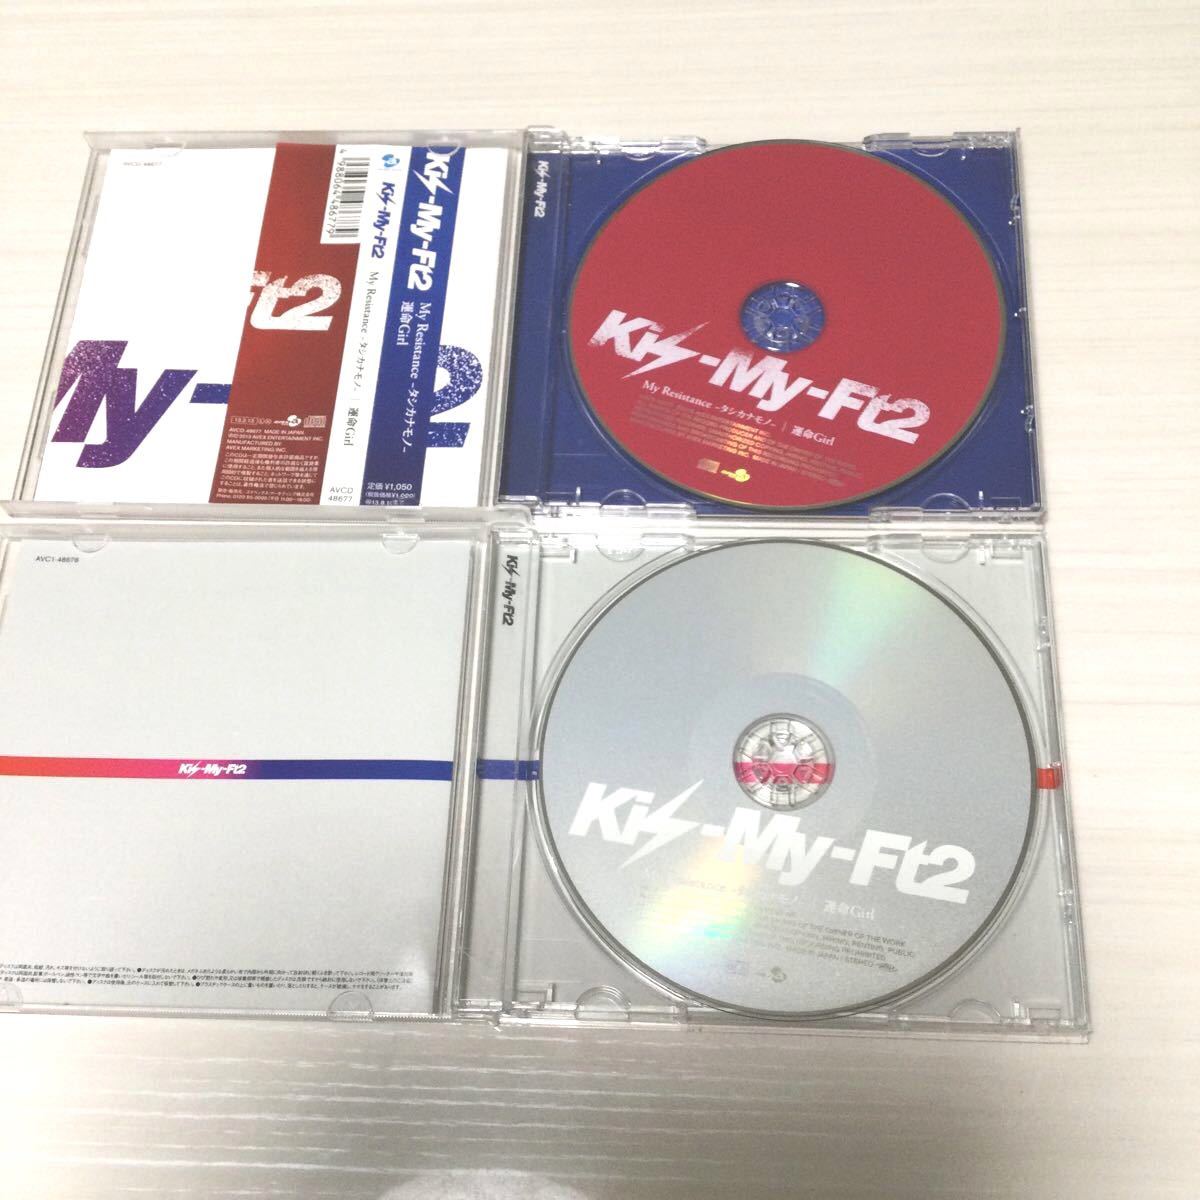 KisーMy ーFt2  CD＋DVD×4＋CD×2    合計6点セット キスマイ